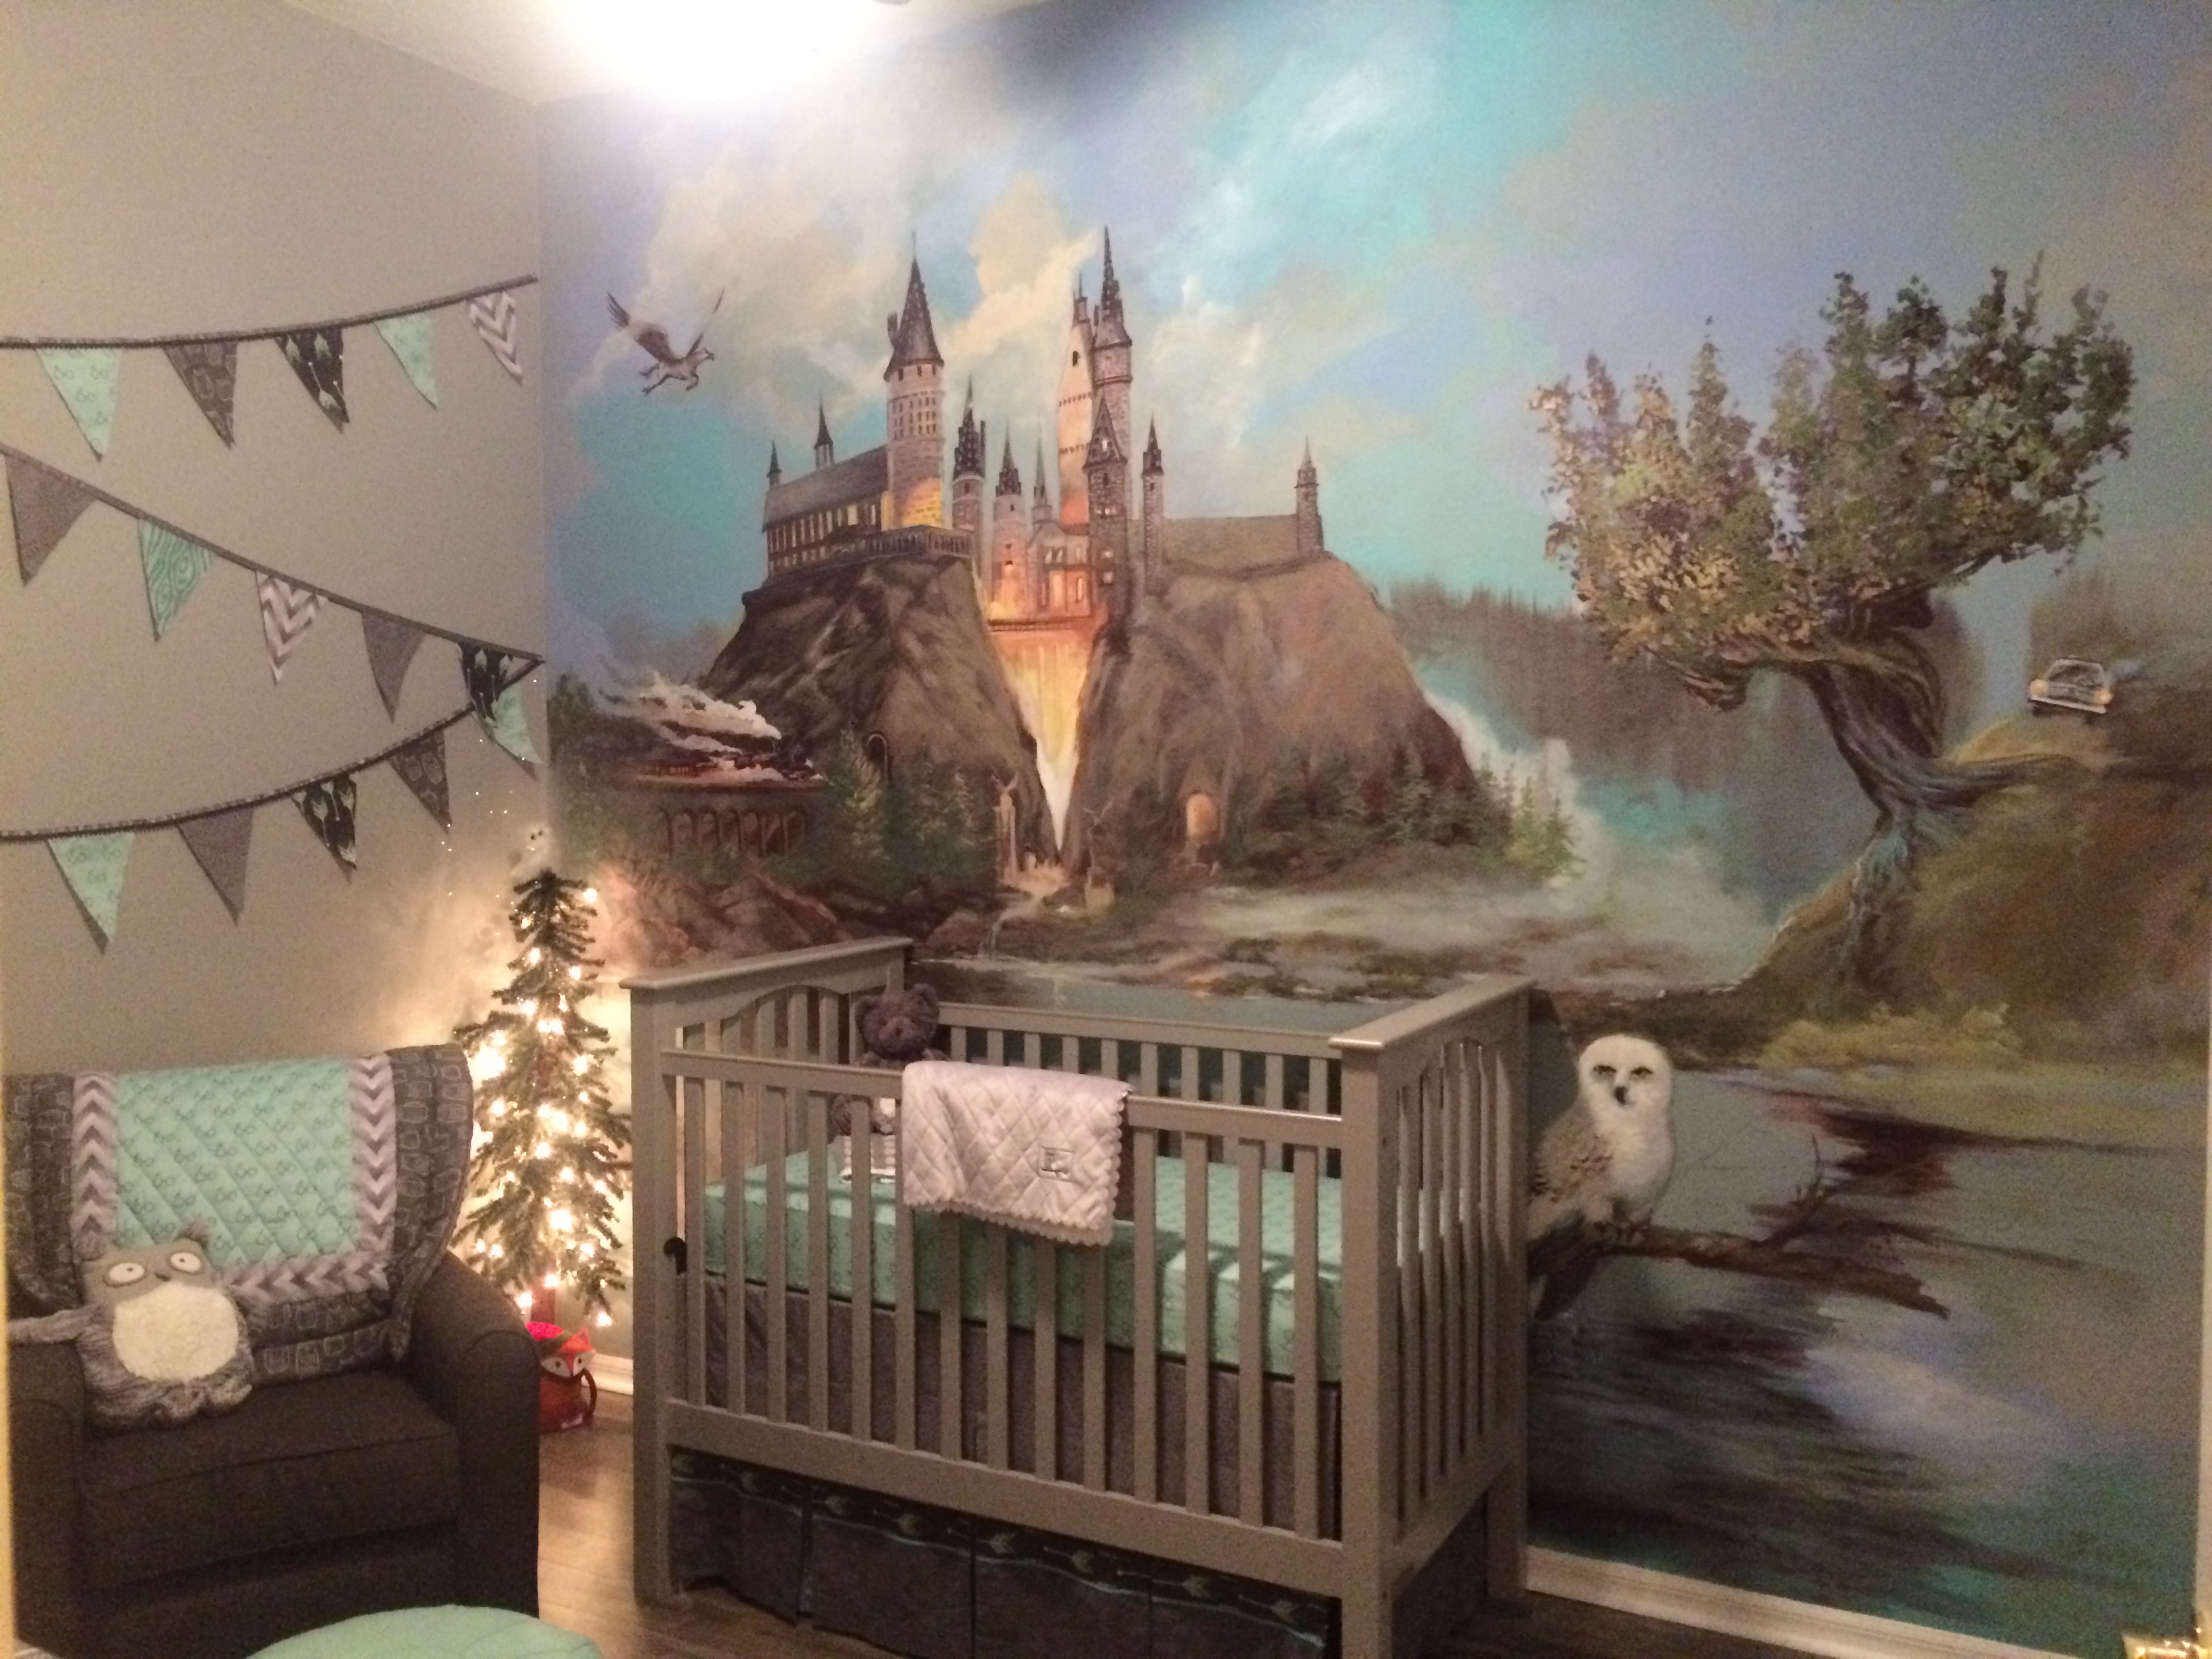 A Harry Potter Inspired Nursery - Project Nursery